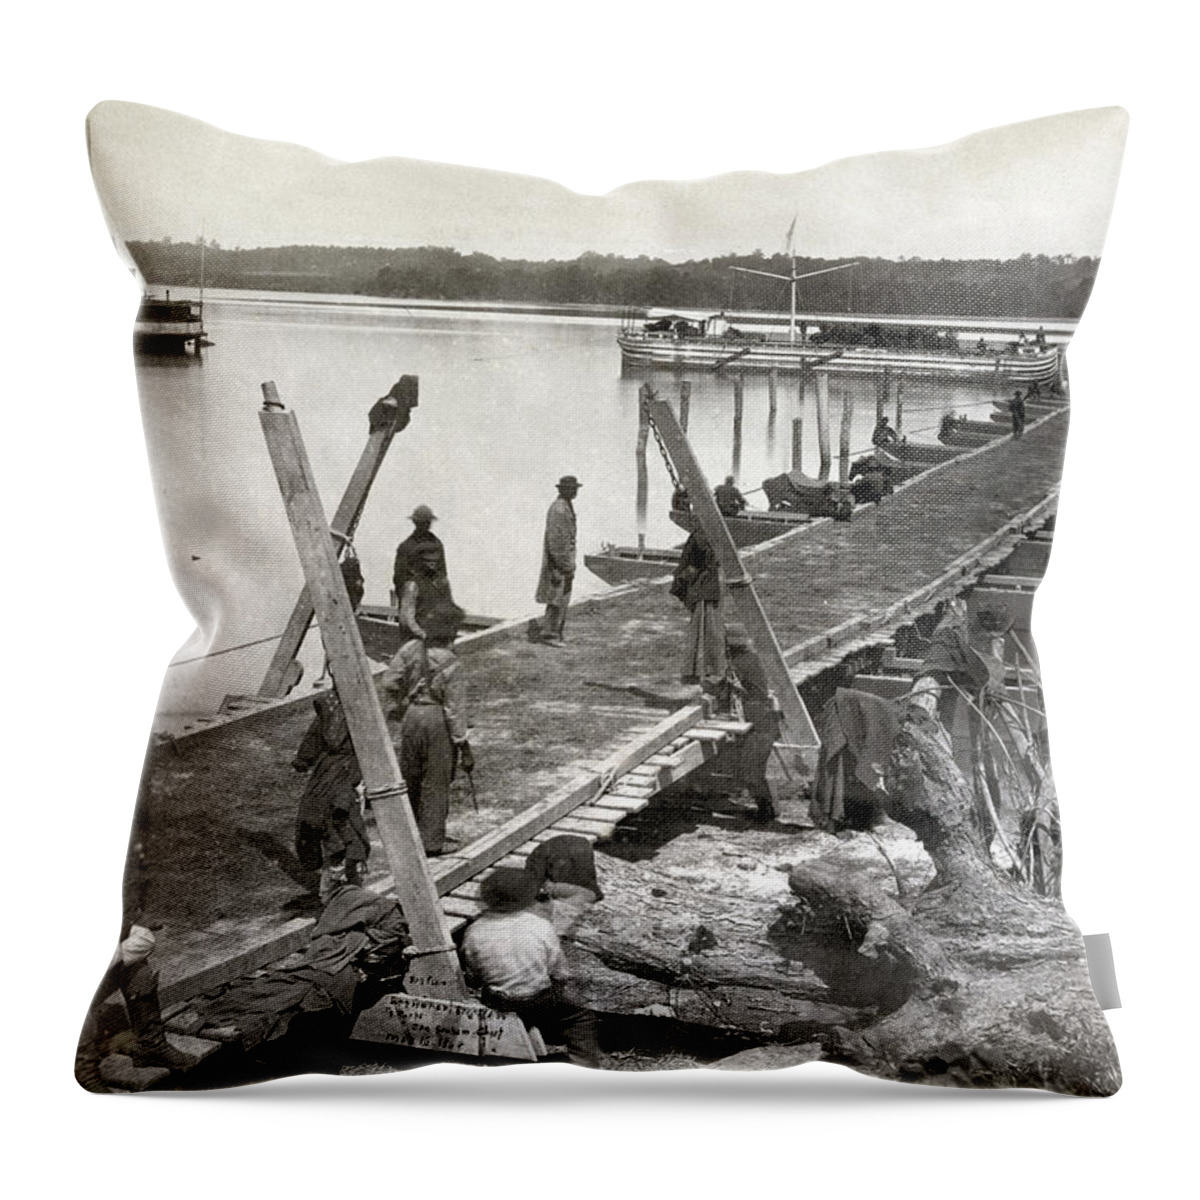 1864 Throw Pillow featuring the photograph Pontoon Bridge, 1864 by Granger